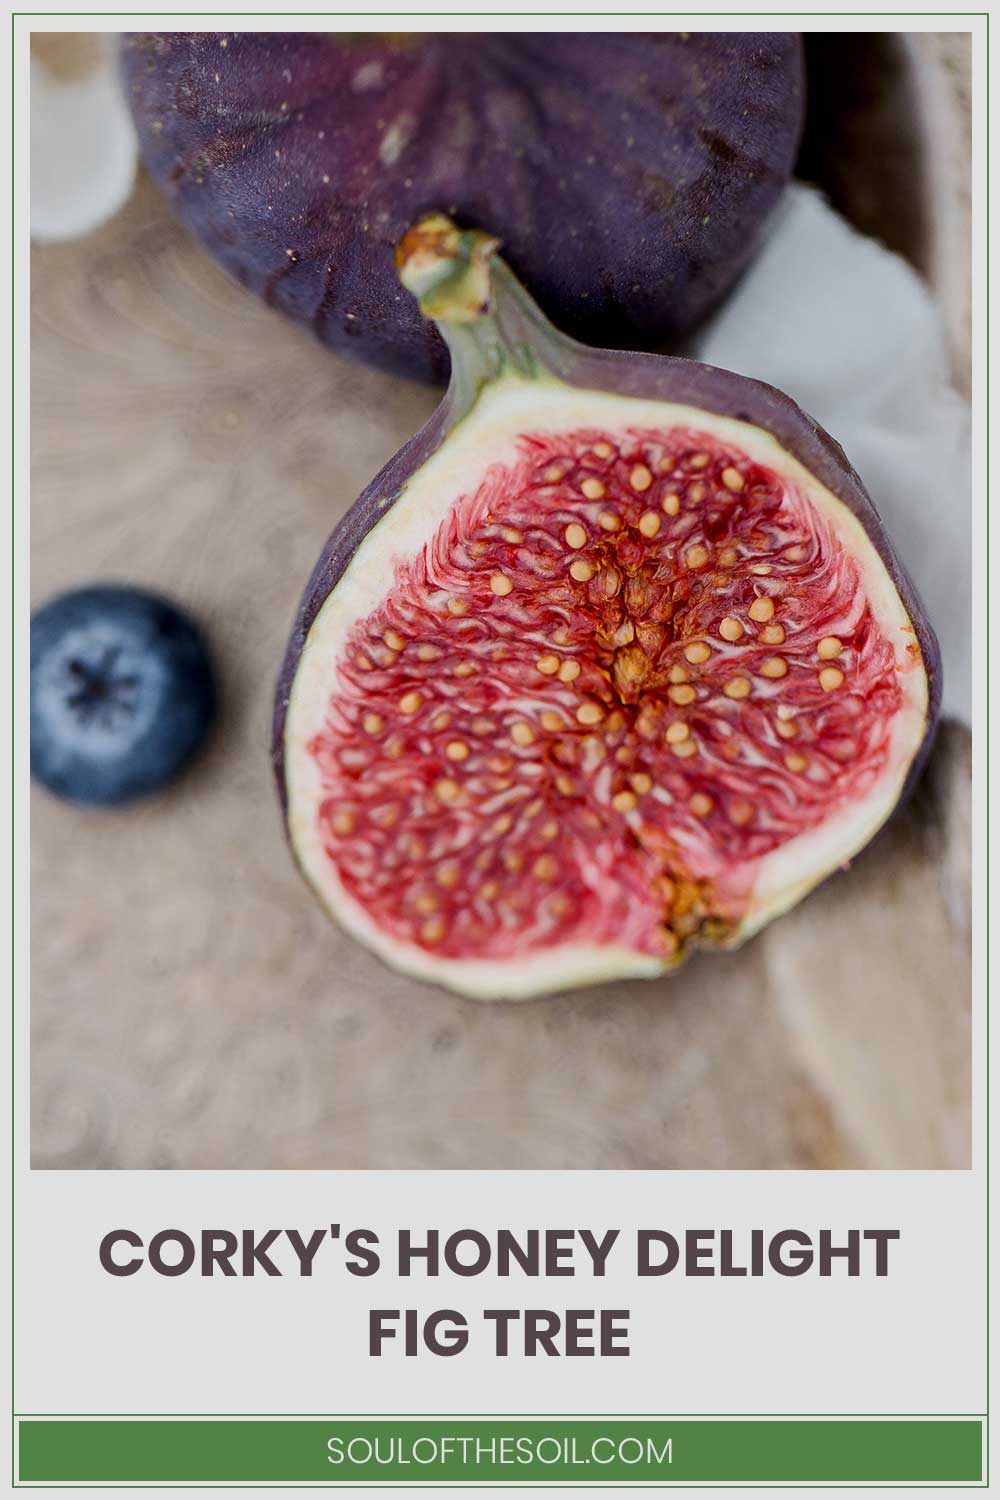 A half-cut fig - Corky's Honey Delight Fig Tree